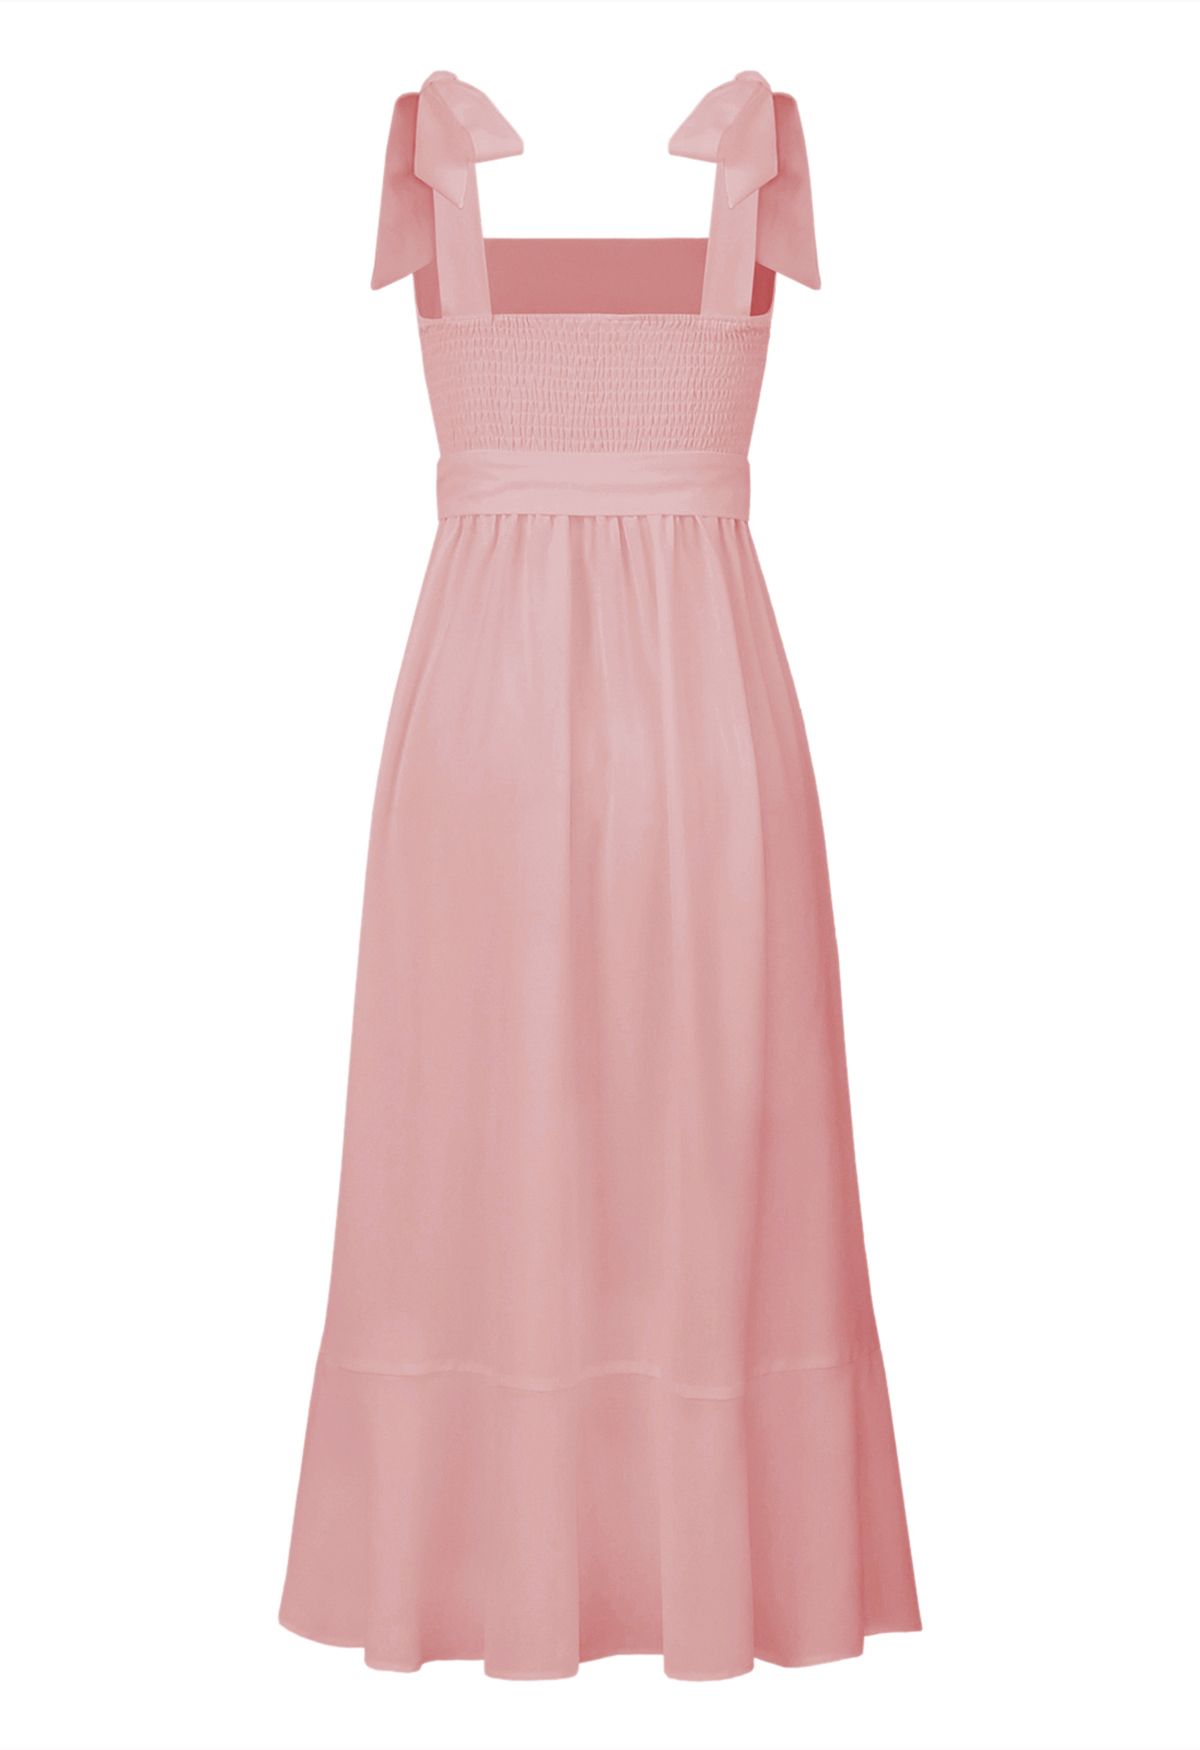 Ruffle Hem Tie-Shoulder Cami Dress in Pink